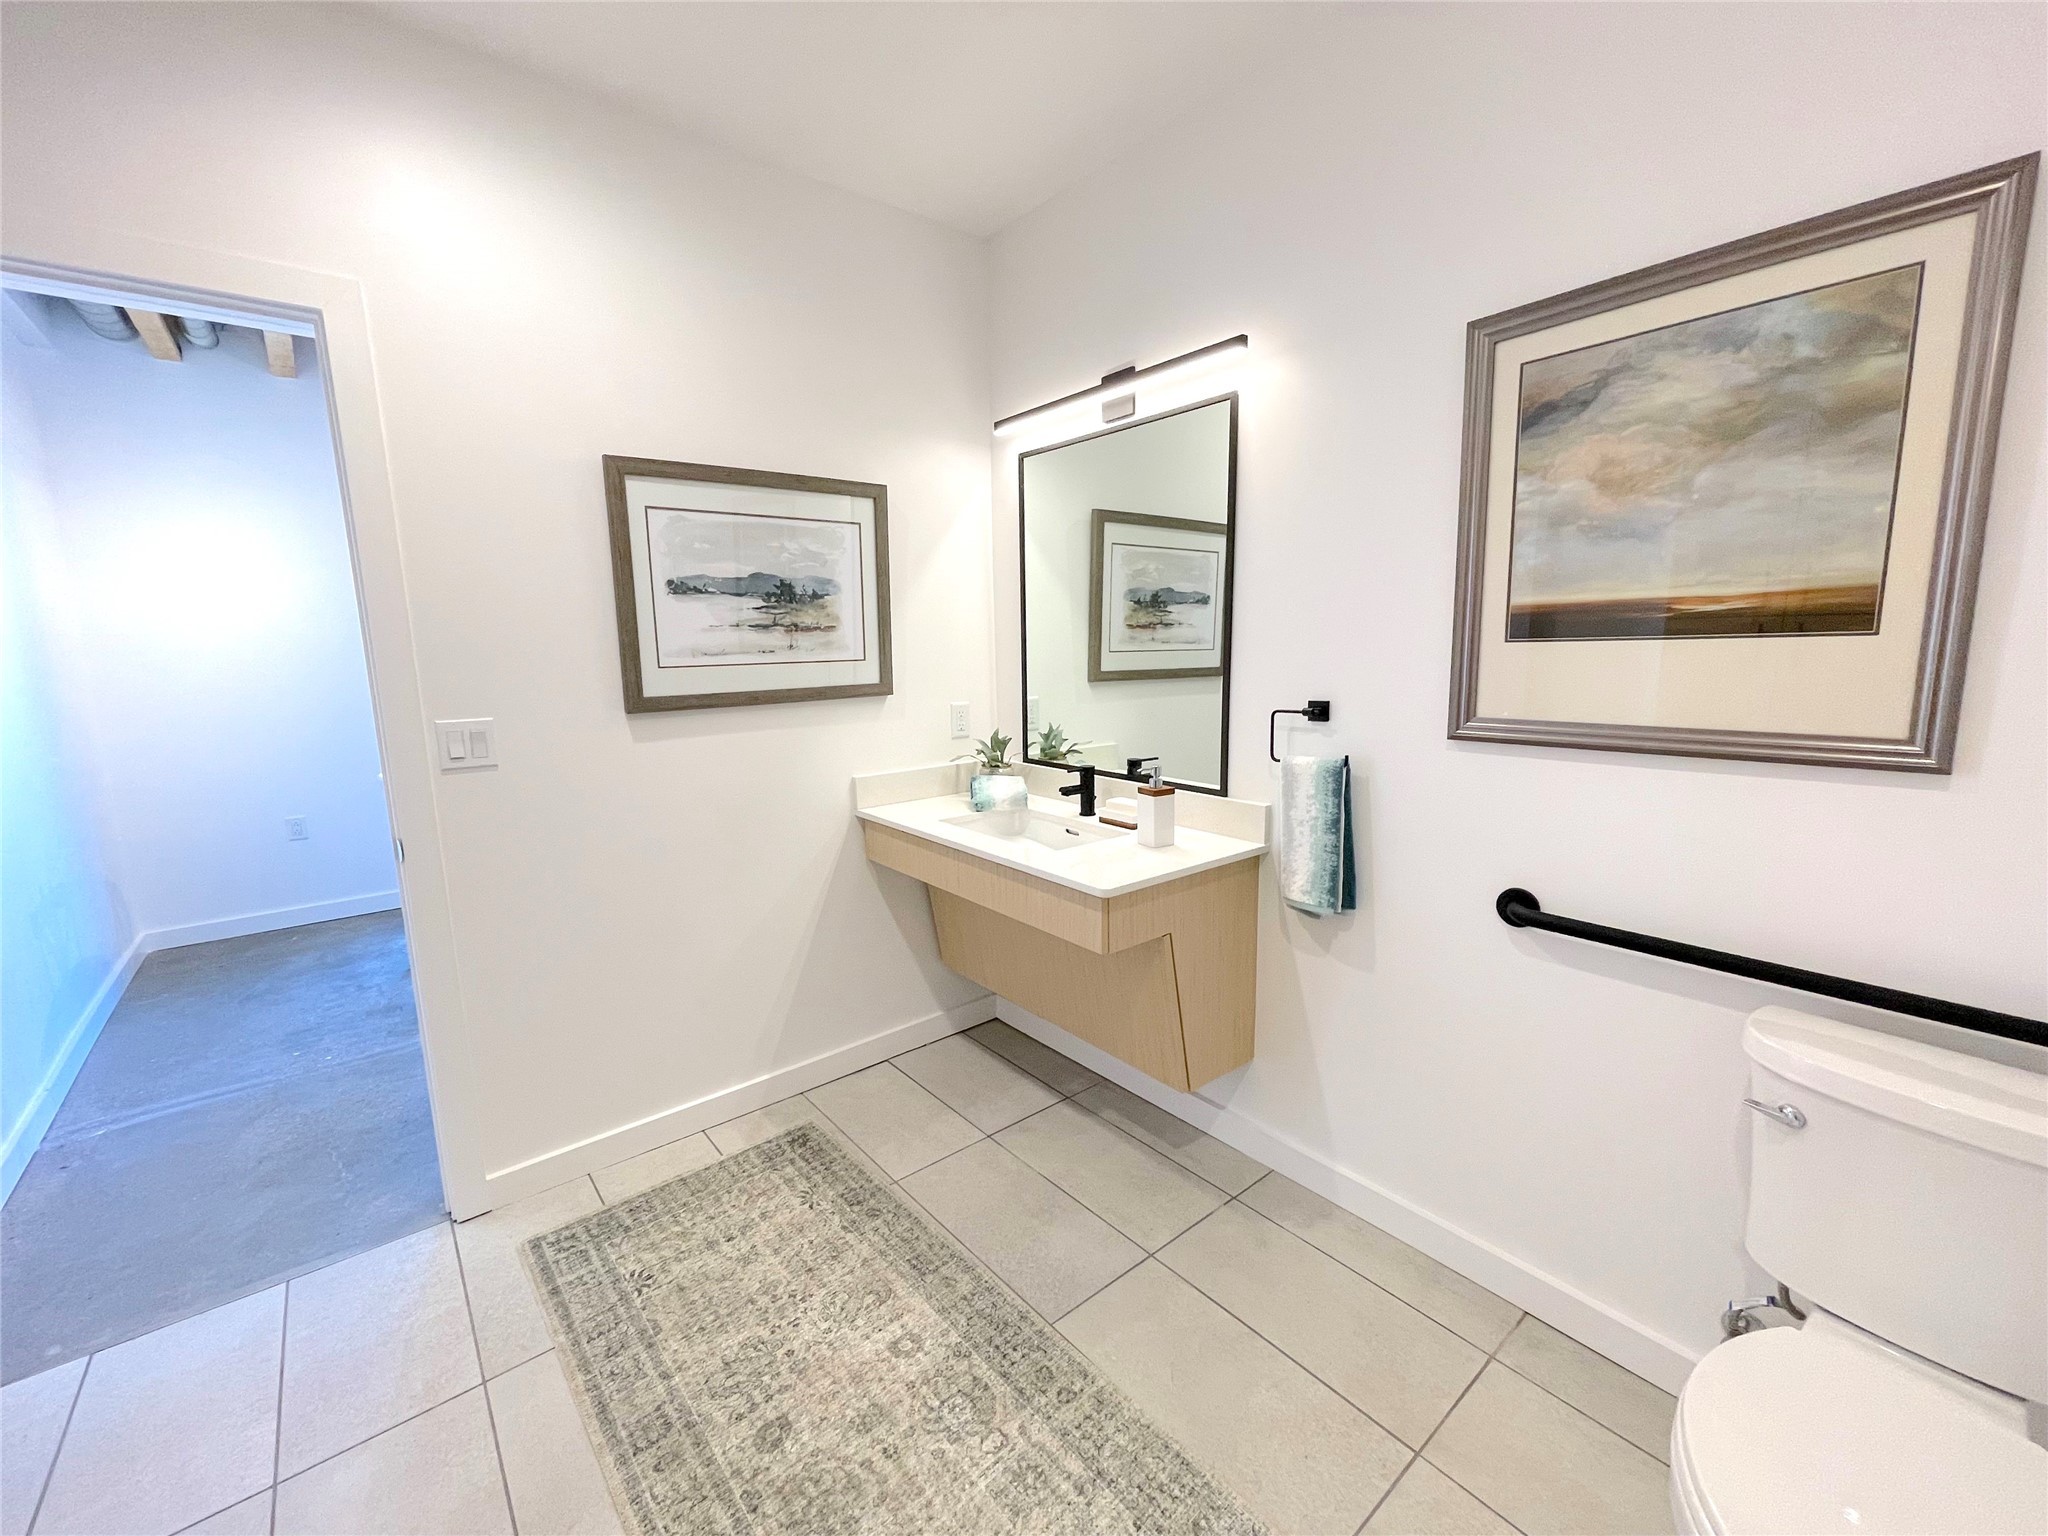 Ground Floor – ADA compliant half bath